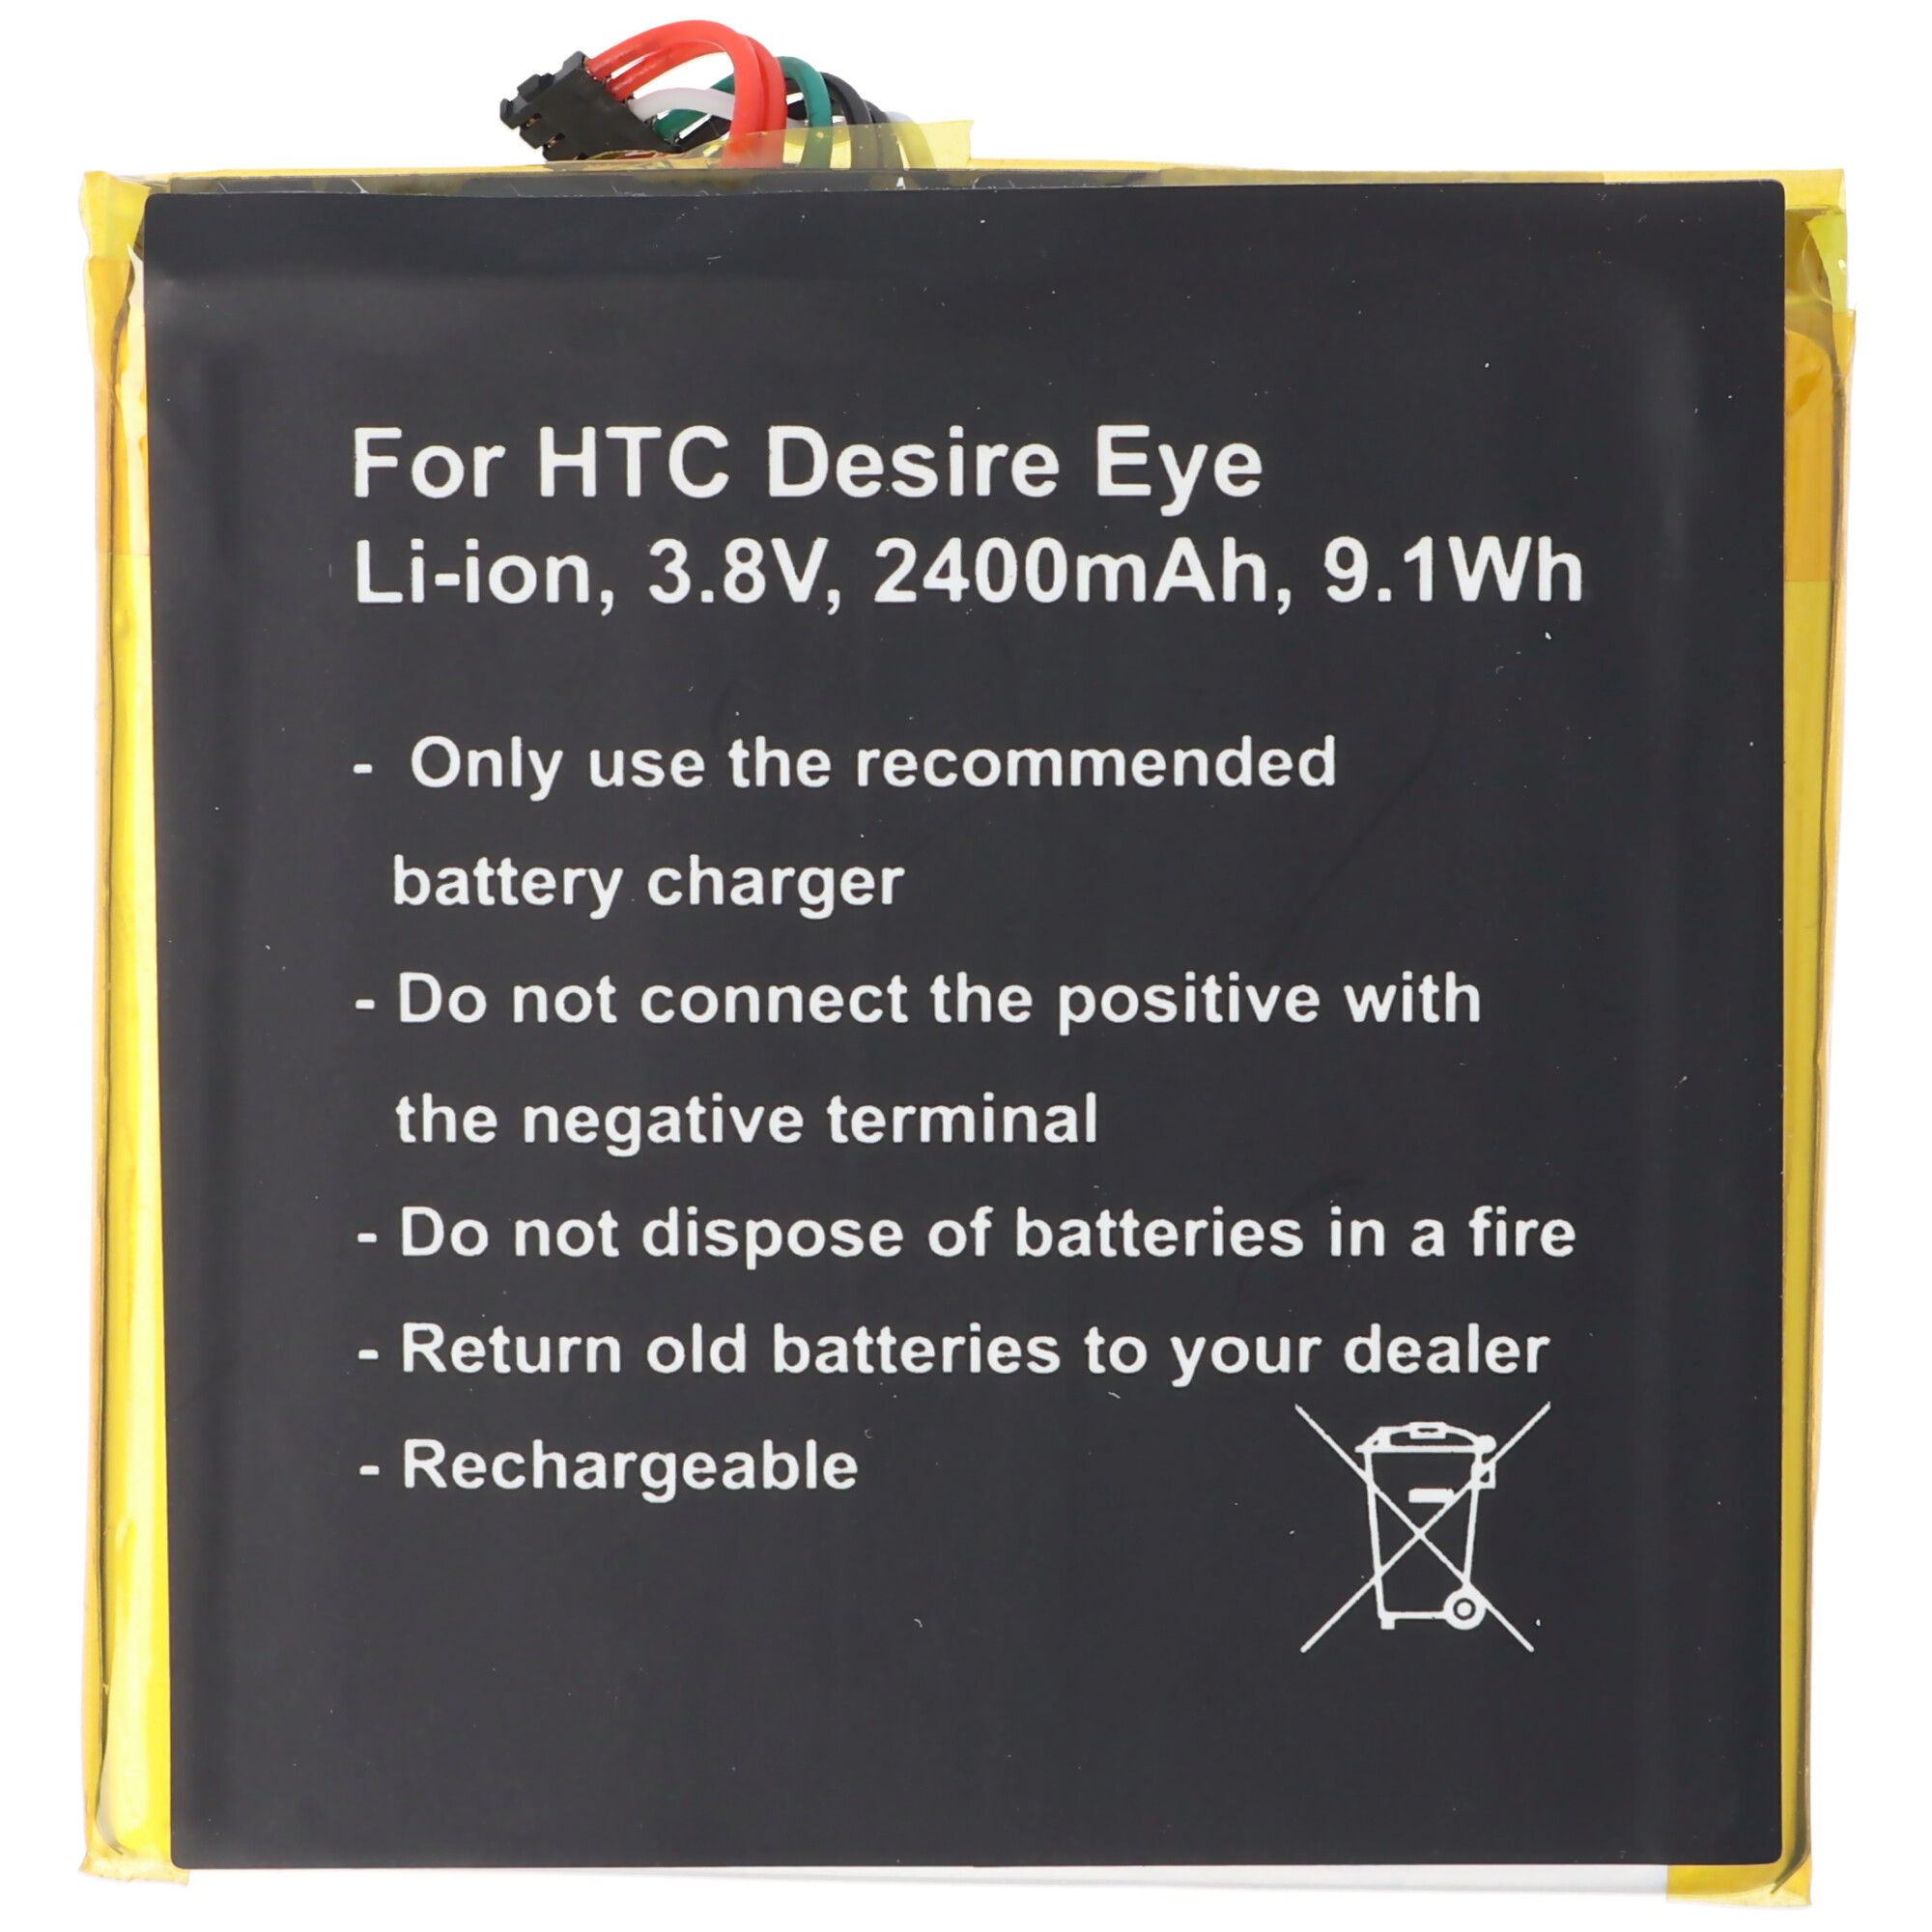 ACCUCELL Akku passend für HTC 2400mAh, Li-Ion Li-Ion, built-in, 3,8V, Handy-Akku, Eye, Lithium-Ionen Werkzeug - 9,1Wh, ohne 2400 mAh Desire